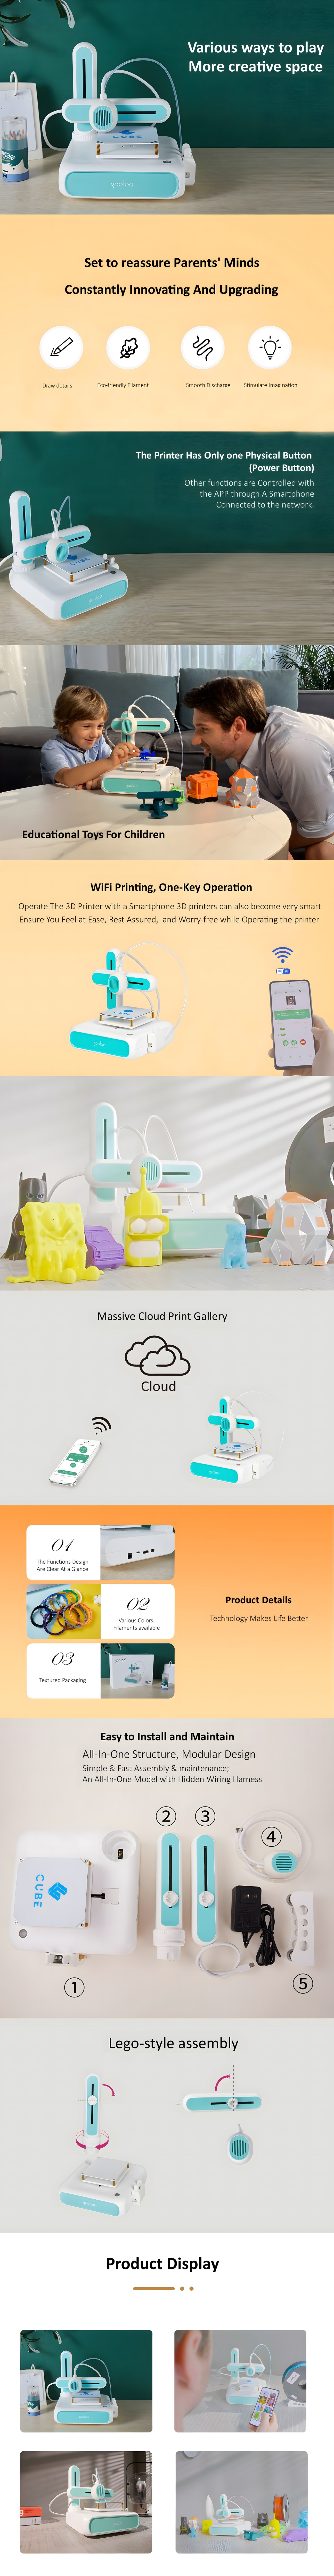 goofoo CUBE 3Dプリンター 大人も子供も楽しめる3Dプリンター-